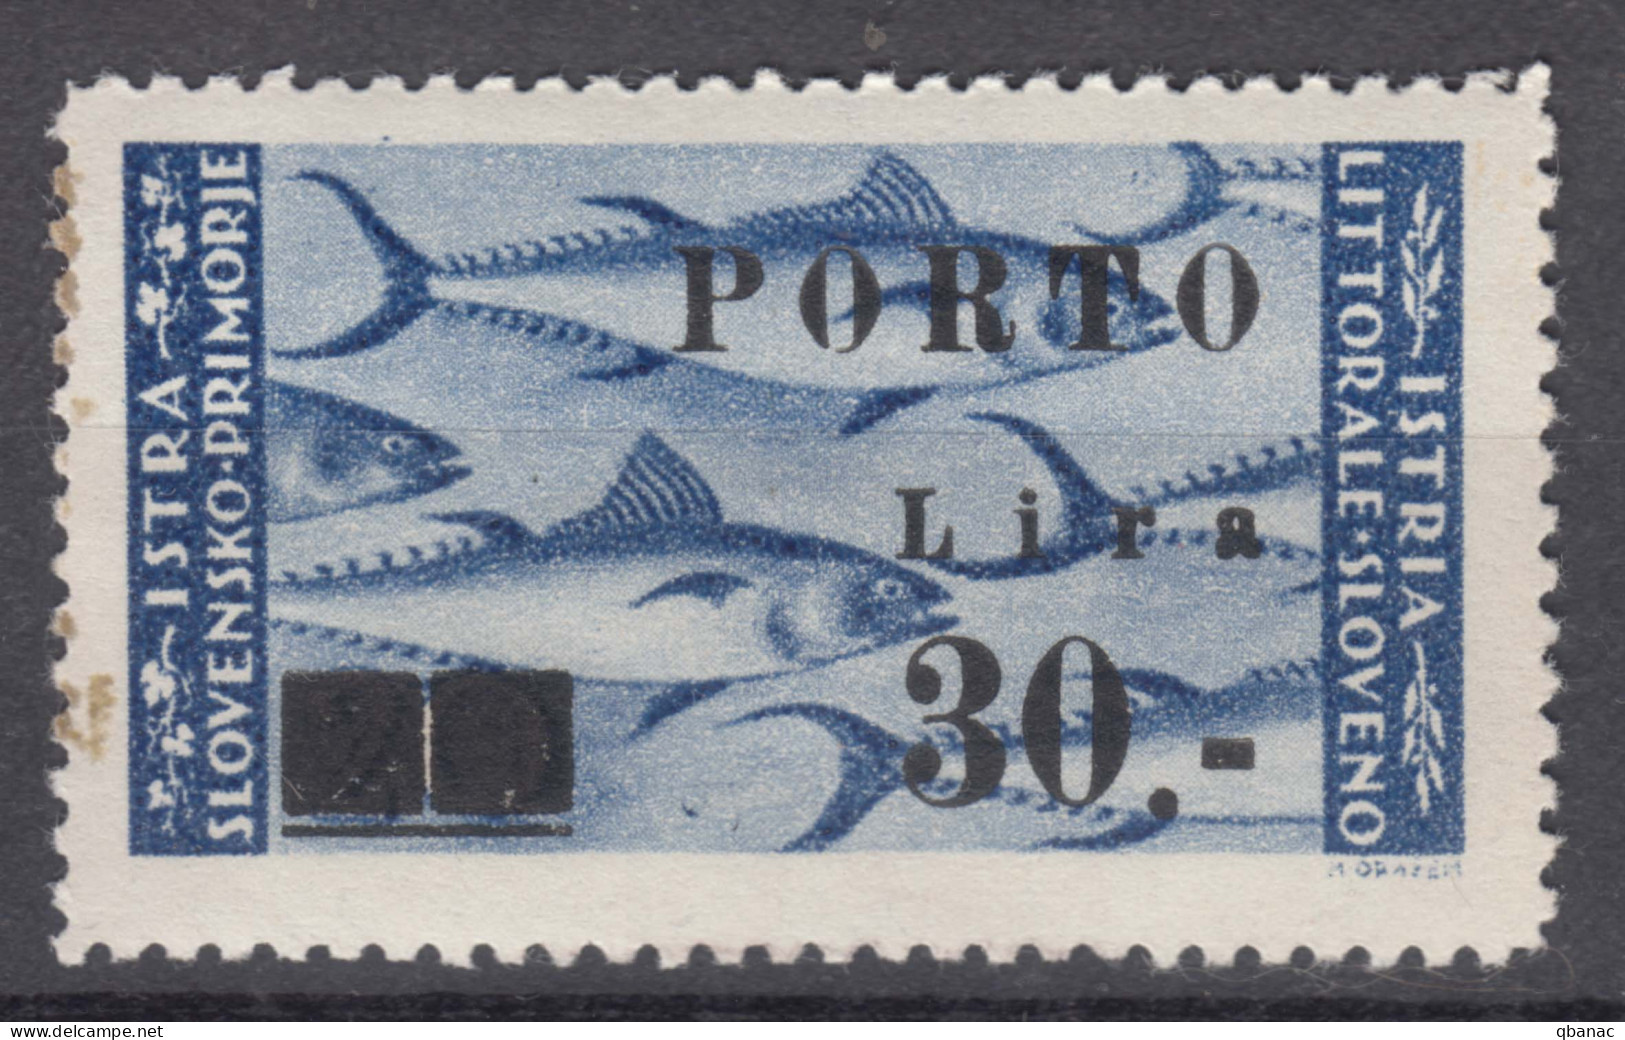 Istria Litorale Yugoslavia Occupation, Porto 1946 Sassone#19 Overprint II, Mint Never Hinged - Ocu. Yugoslava: Istria